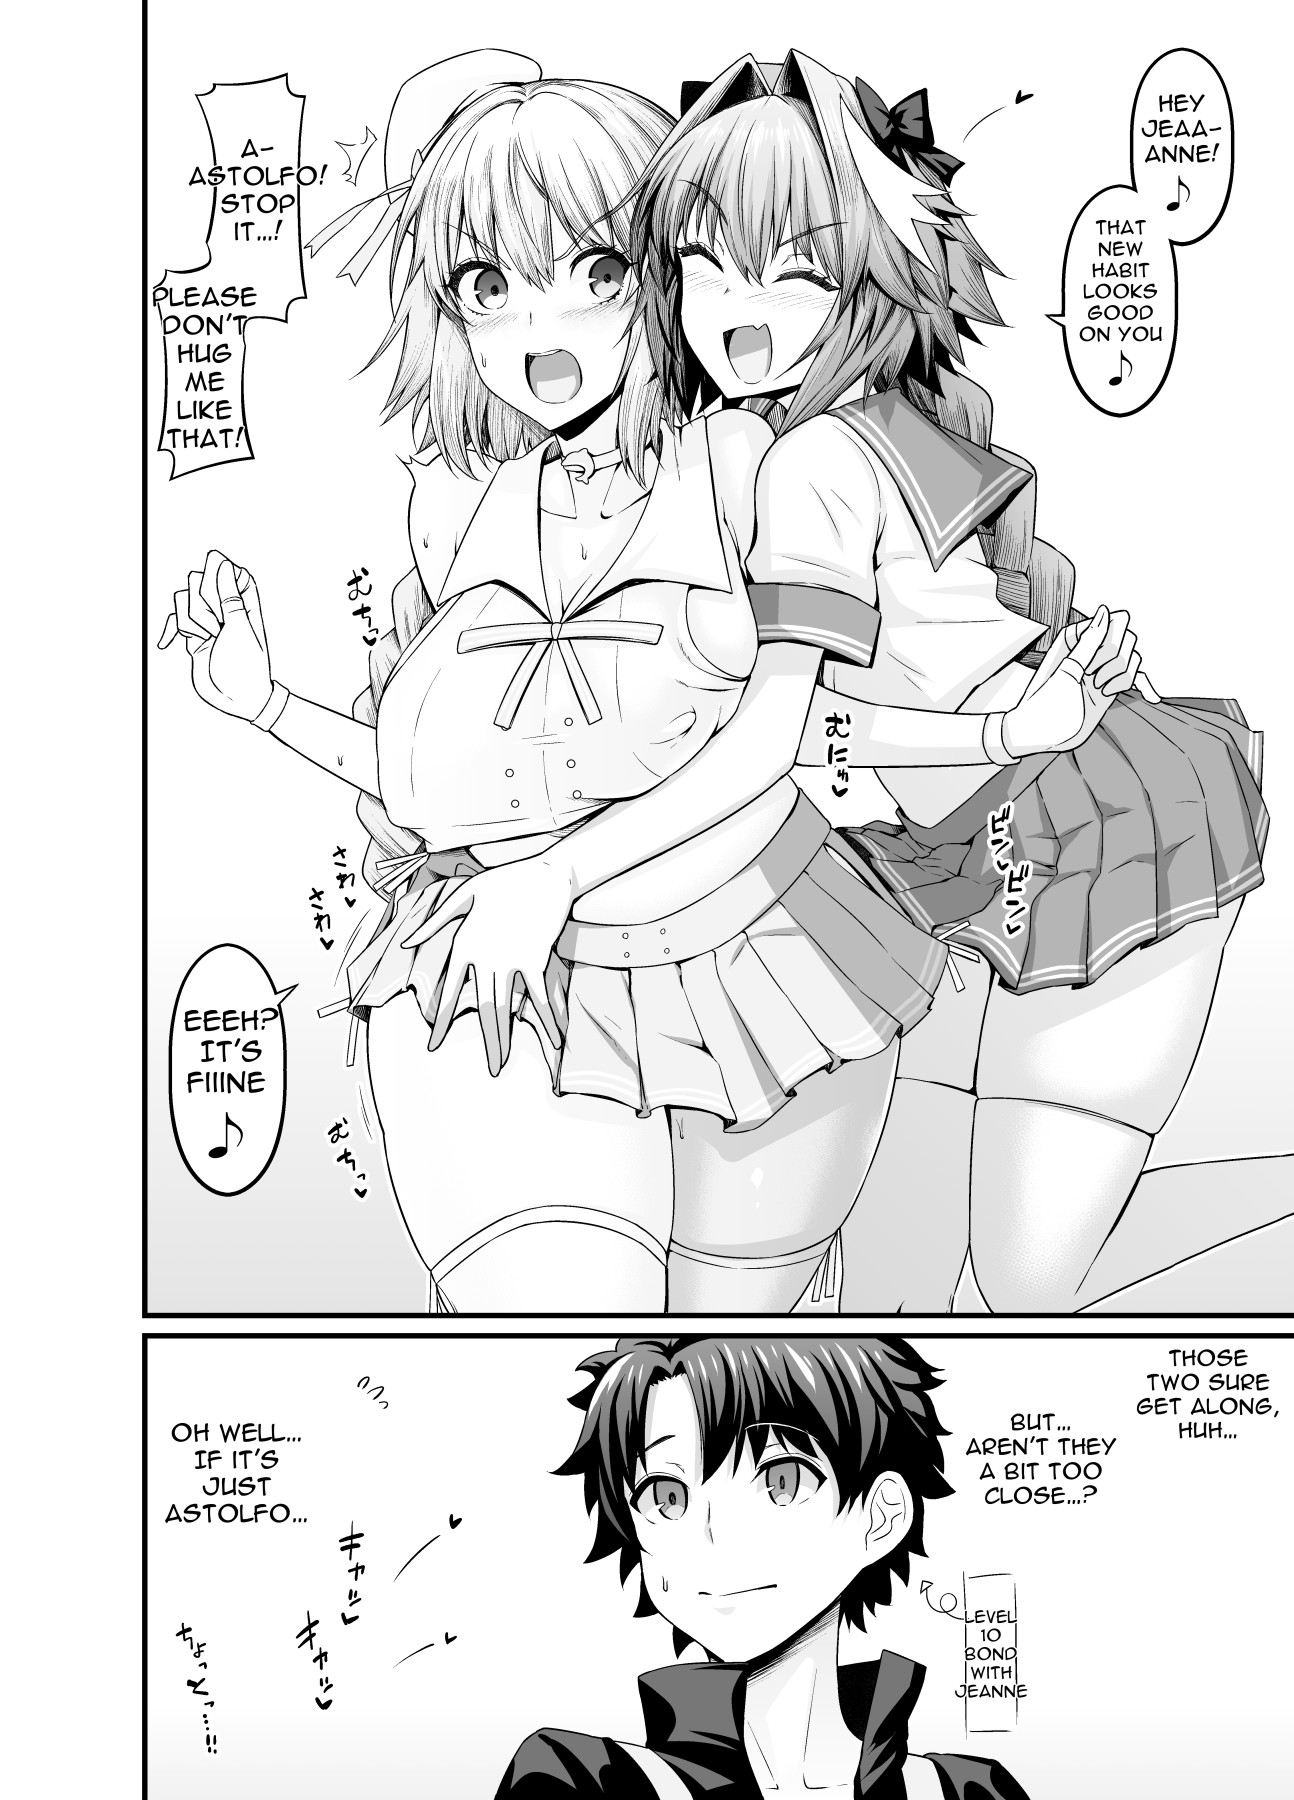 Hentai Manga Comic-Astolfo And Jeanne Get Closer-Read-2